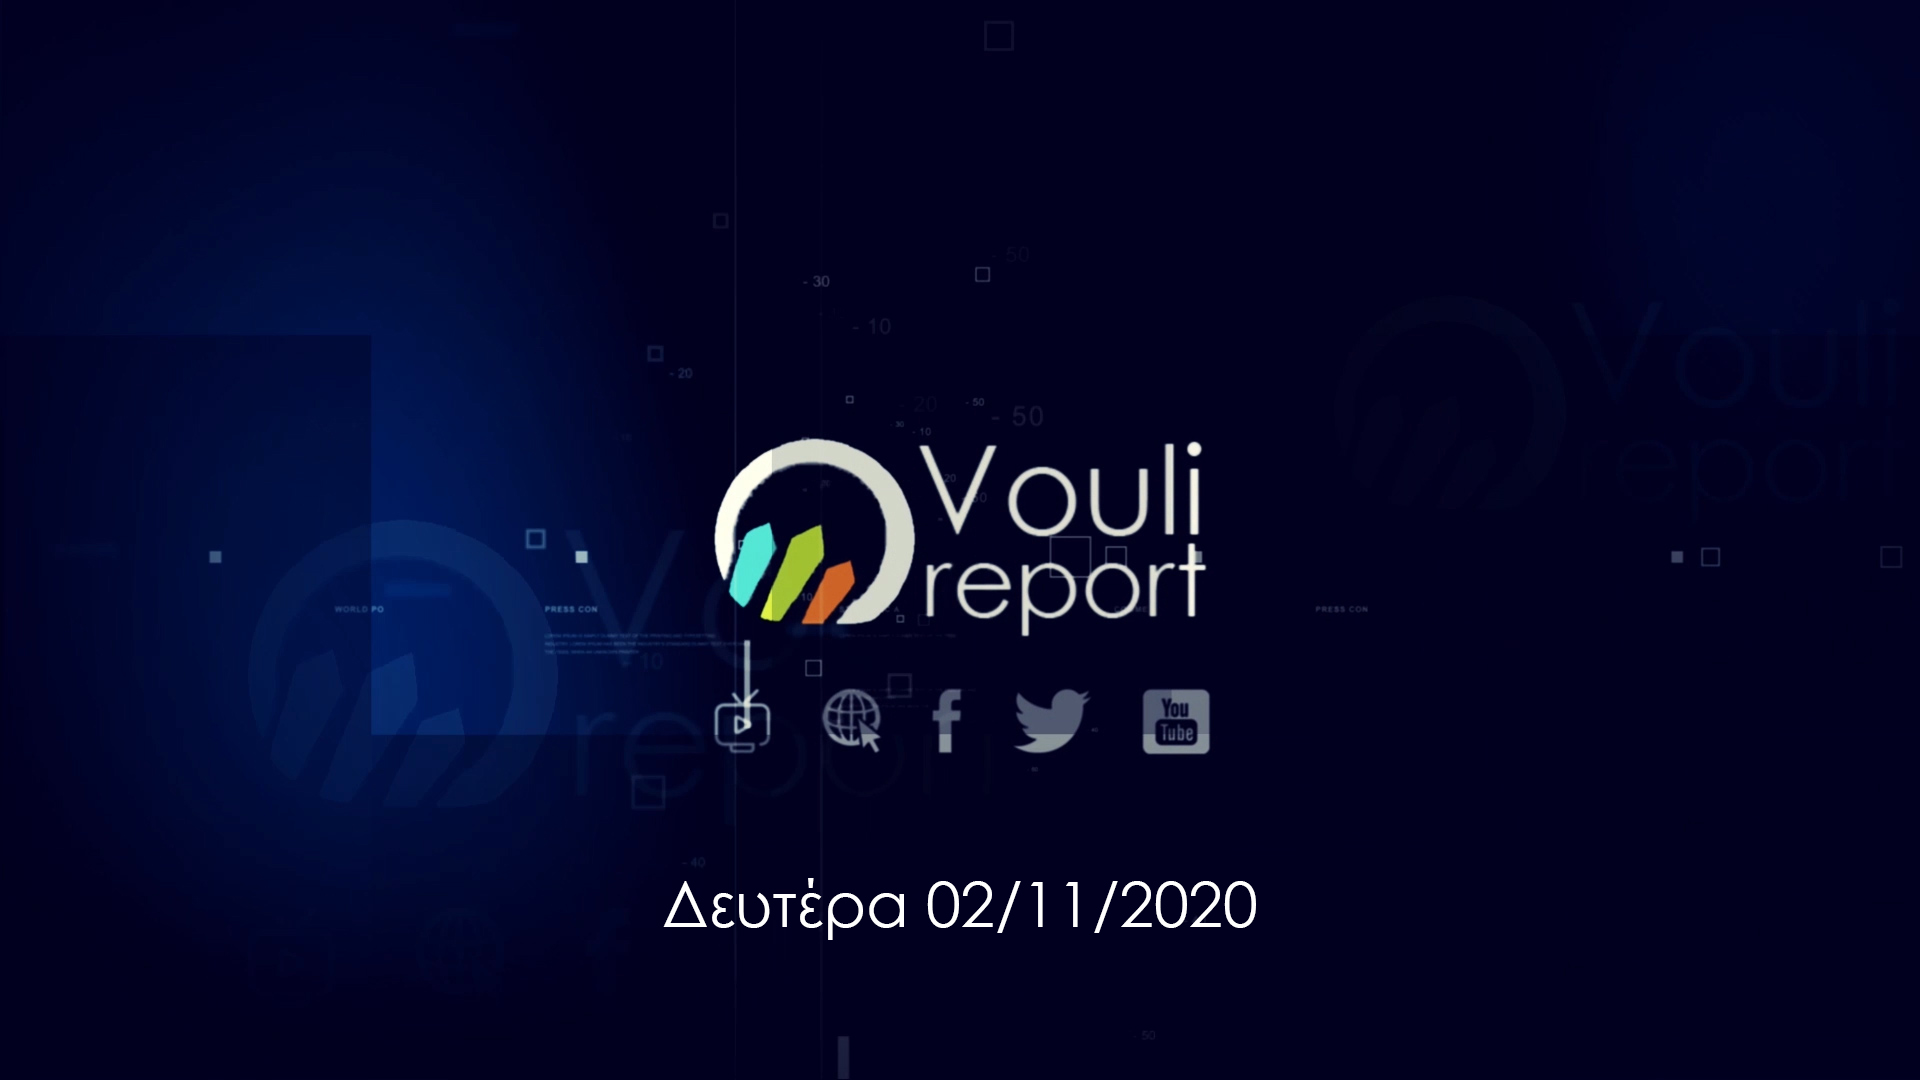 Vouli report | 2/11/2020